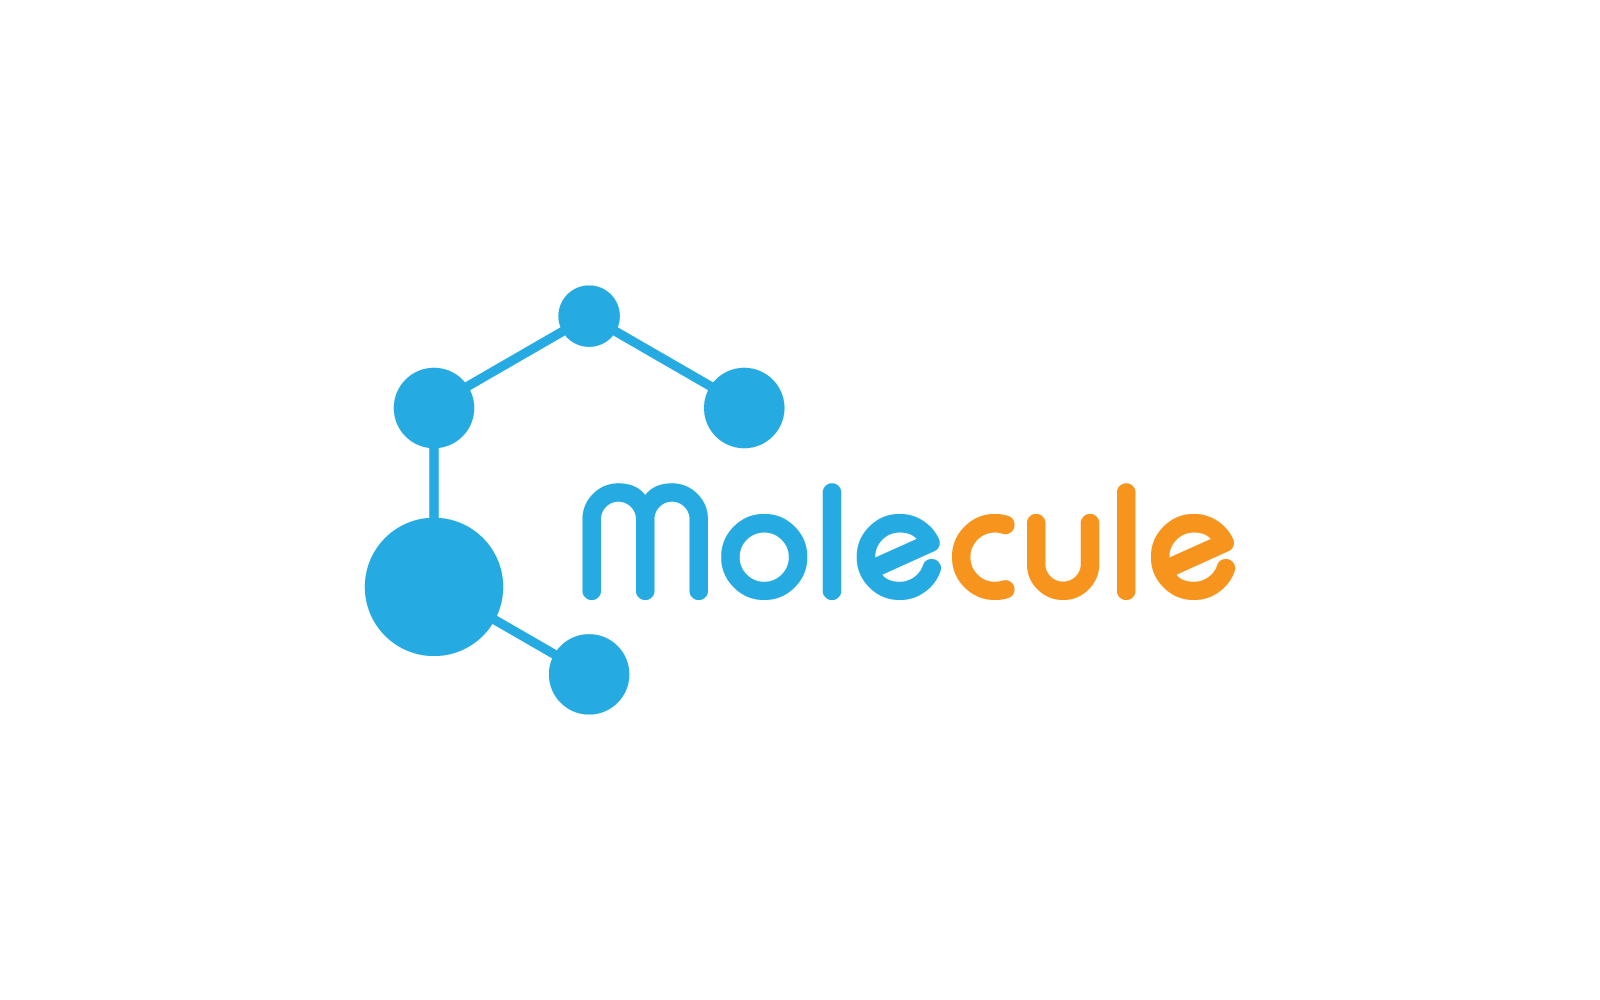 Molecule illustration icon vector flat design template